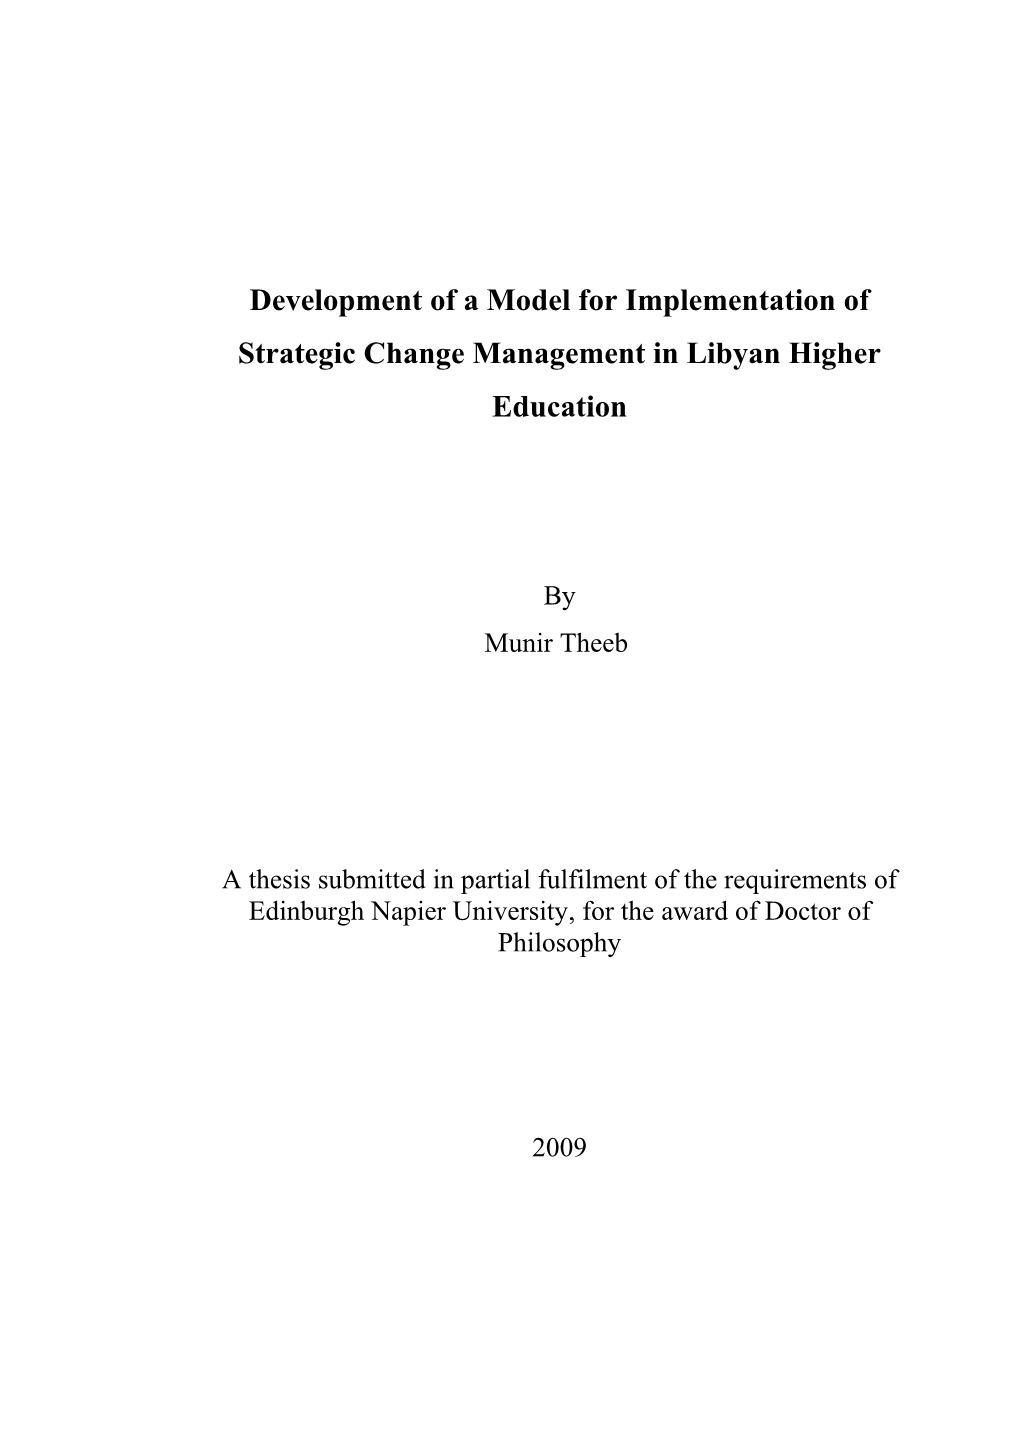 Development of a Model for Implementation of Strategic Change Management in Libyan Higher